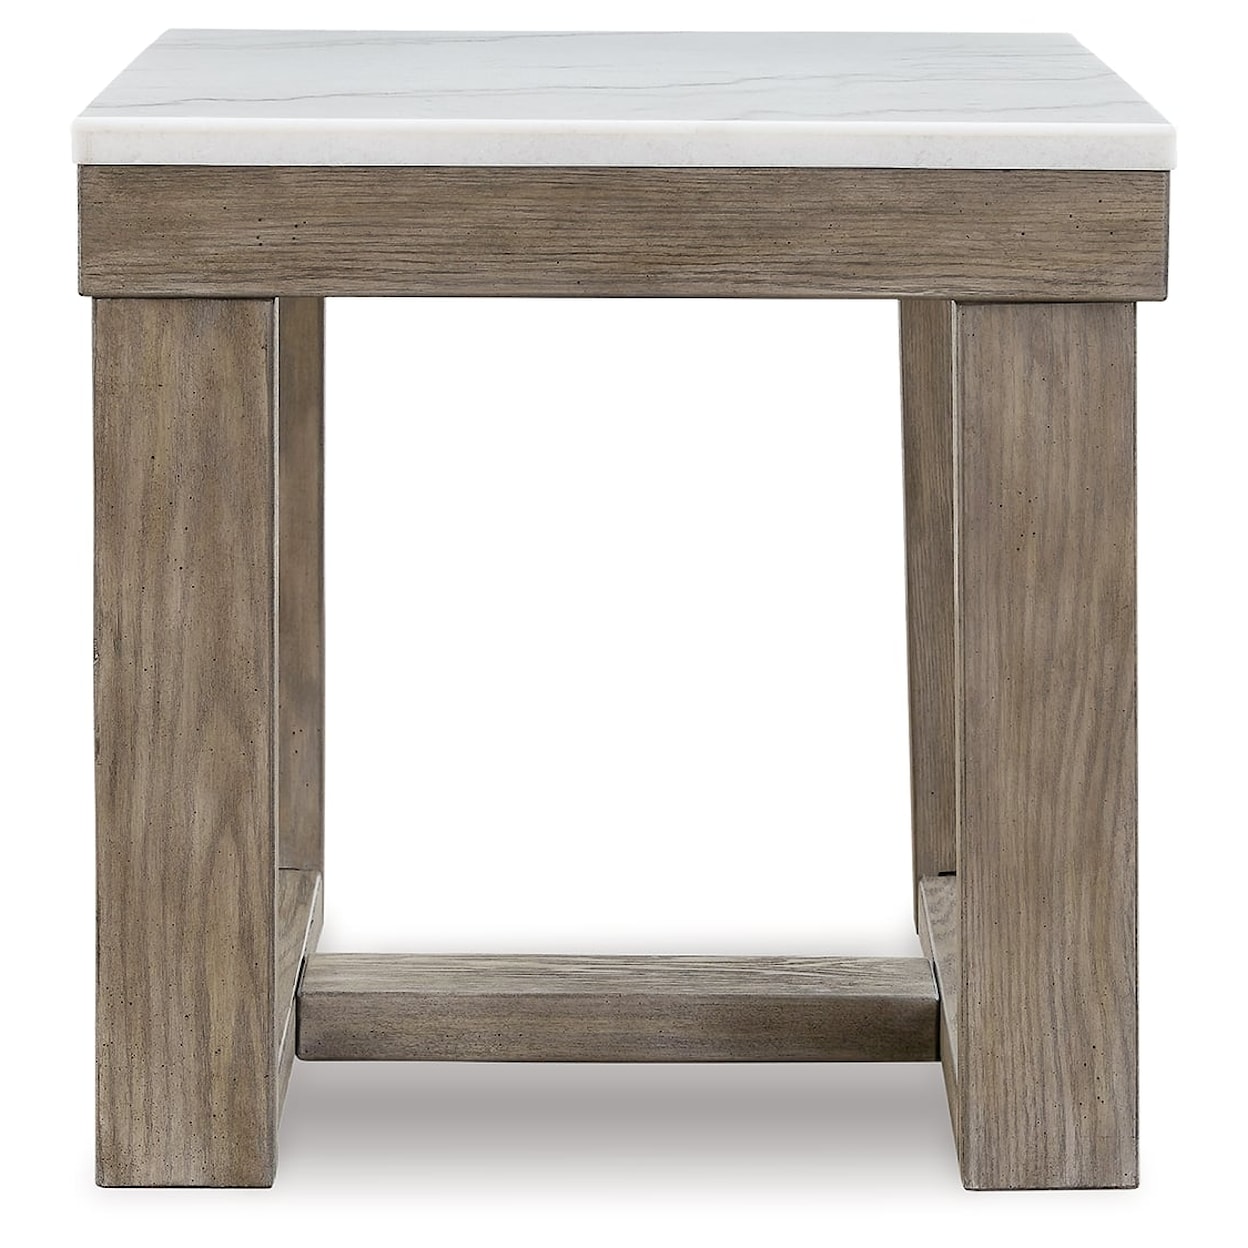 Ashley Furniture Signature Design Loyaska Square End Table